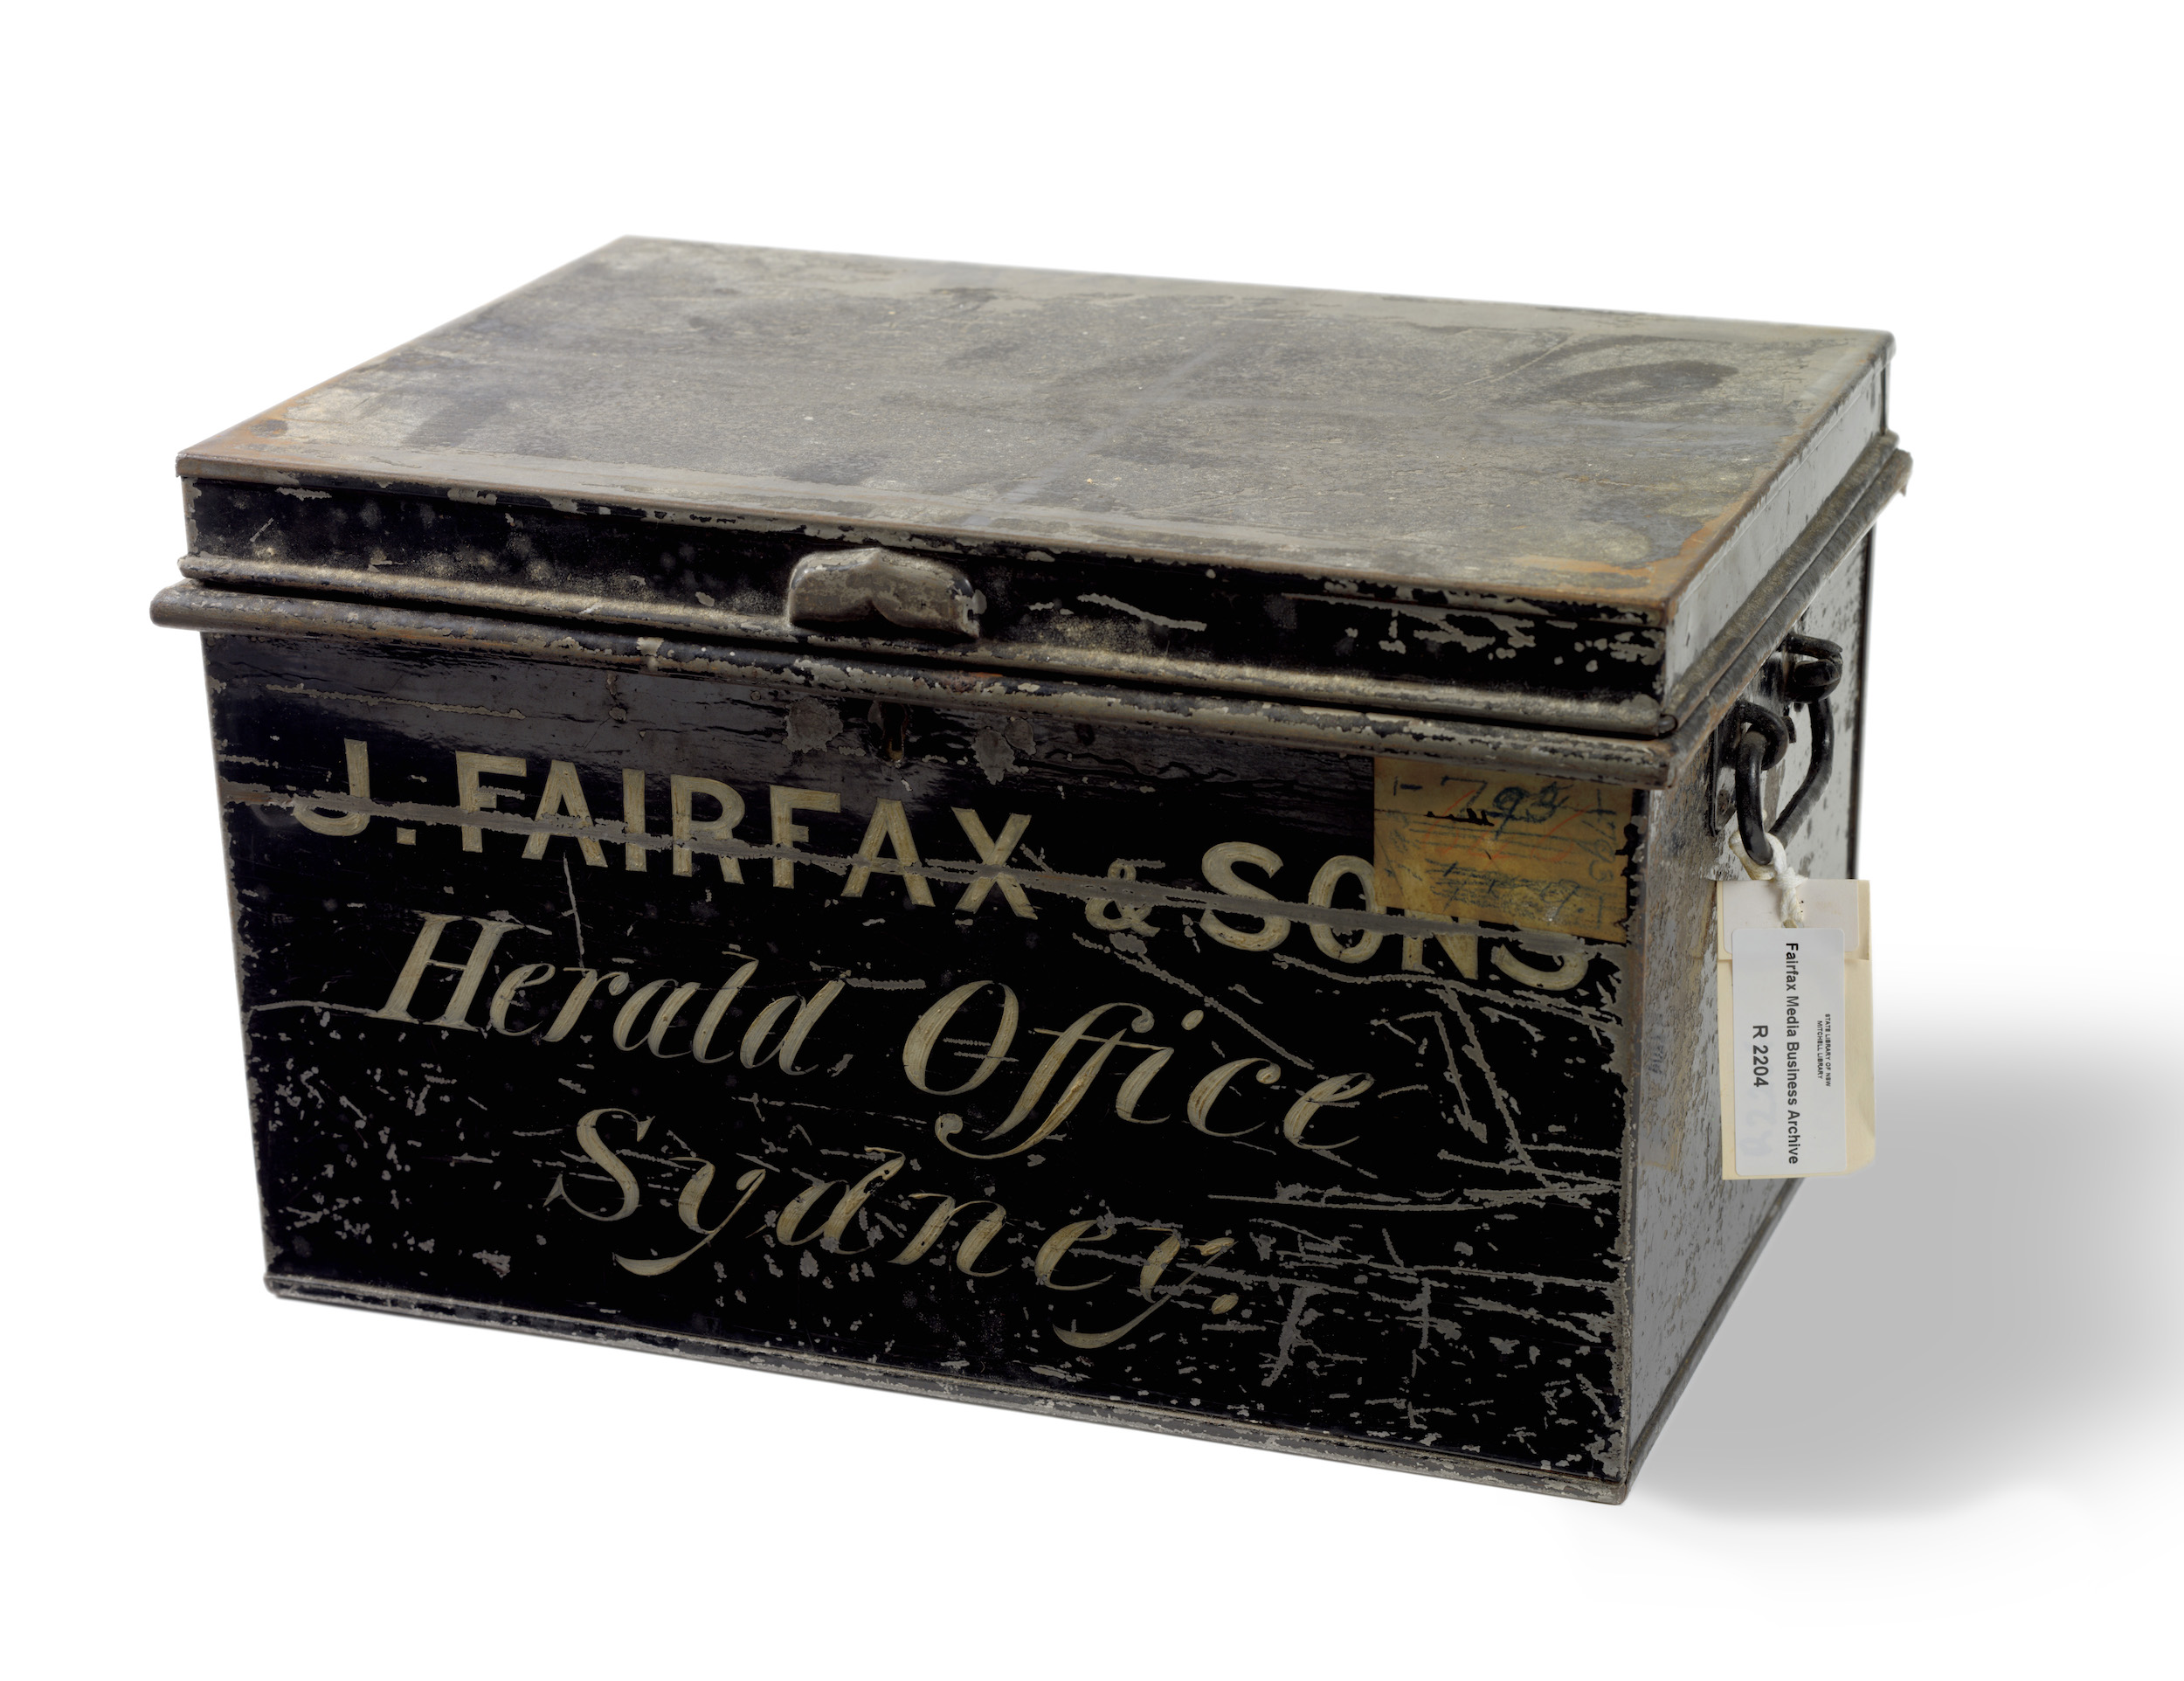 Fairfax box